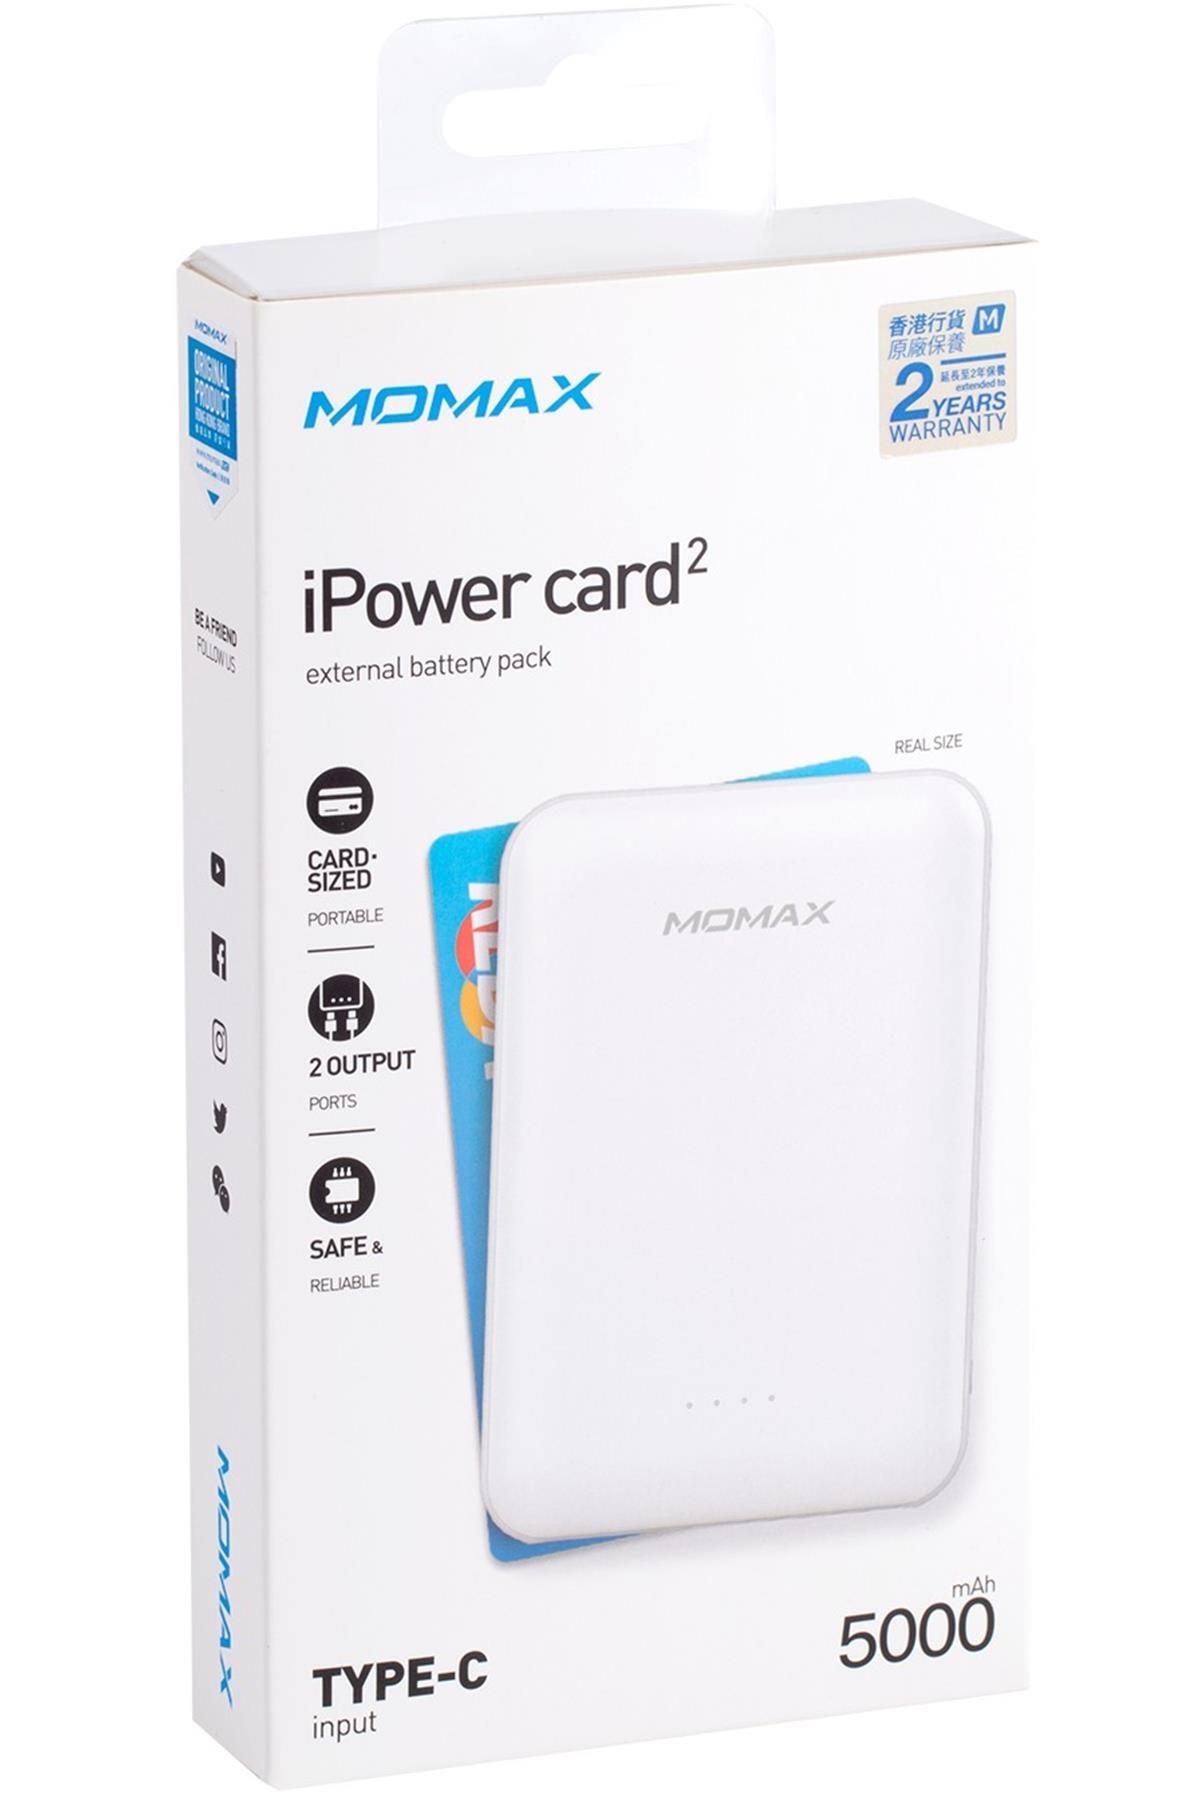 Momax Ipower Card2 5.000 Mah Powerbank